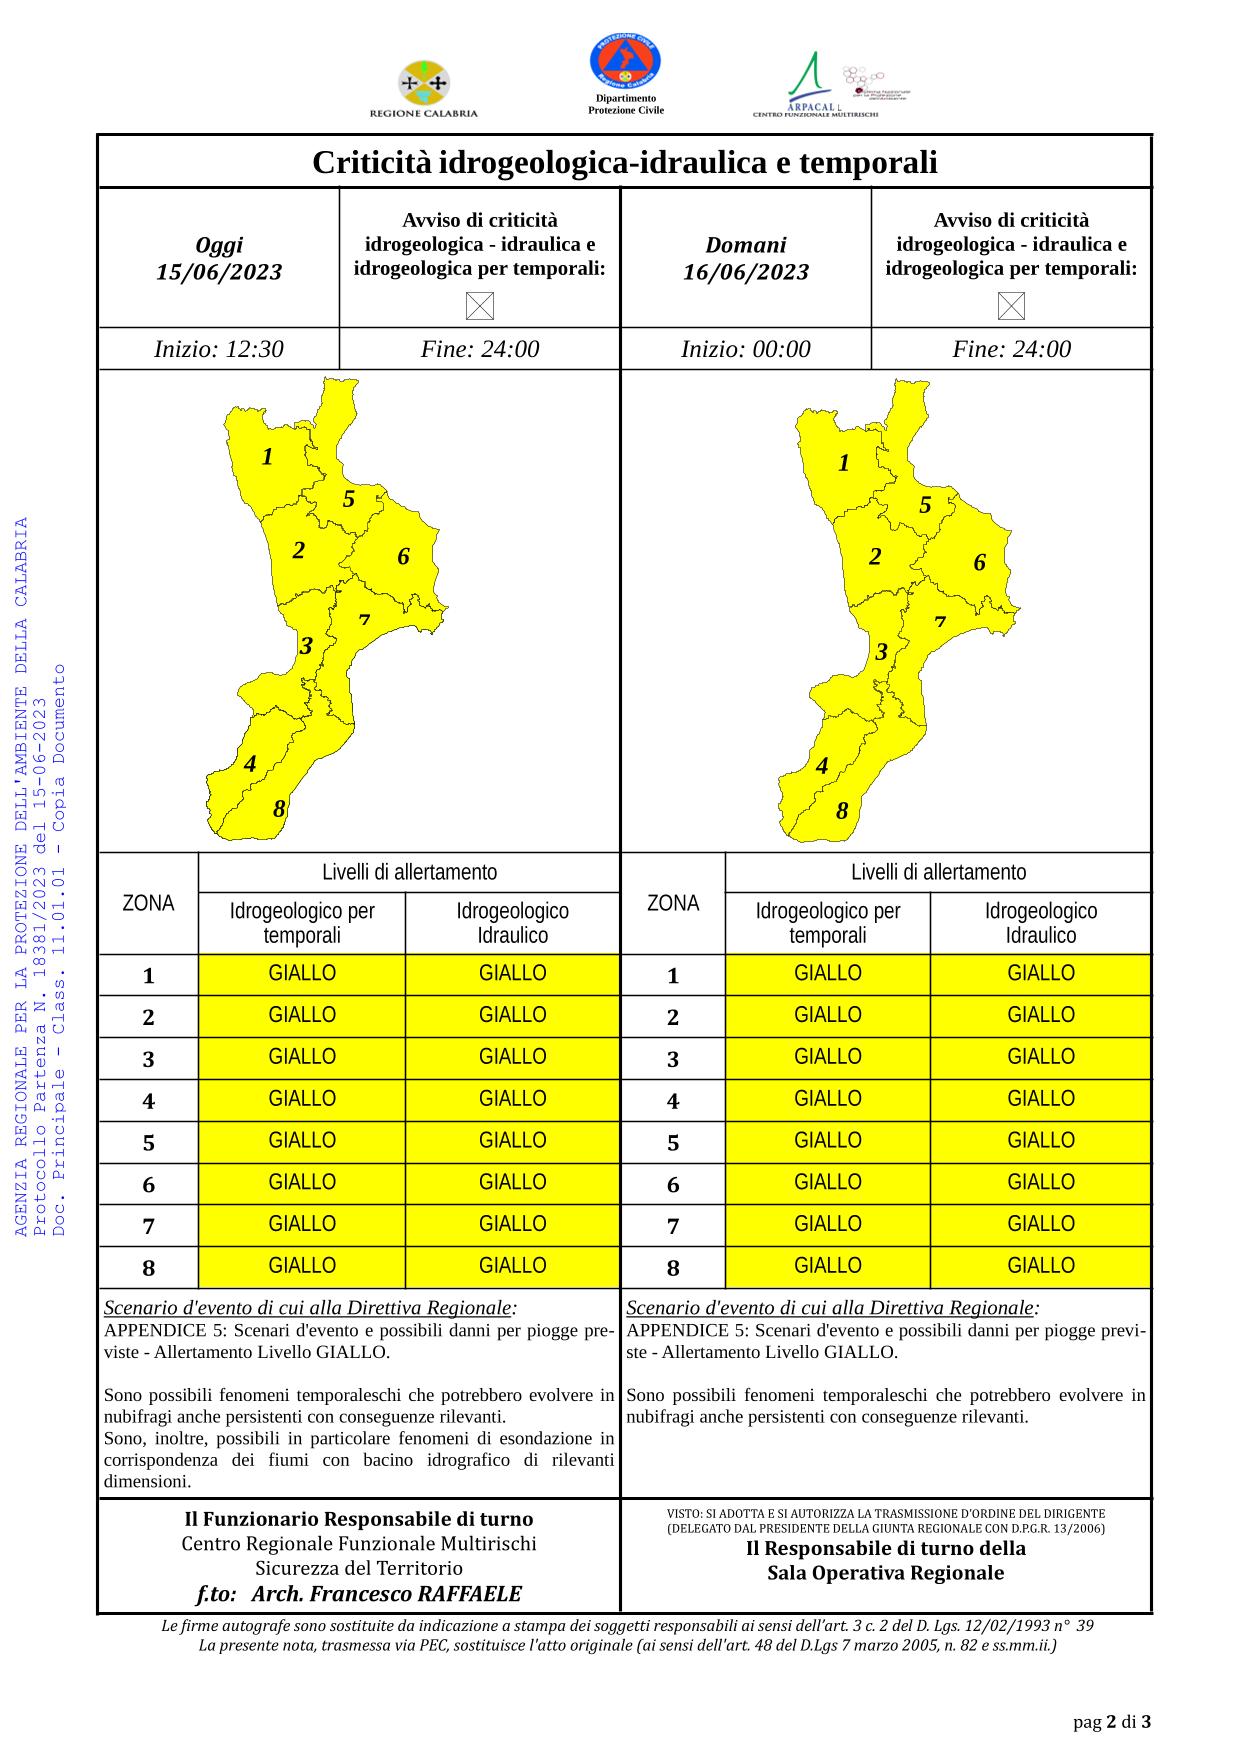 Criticità idrogeologica-idraulica e temporali in Calabria 15-06-2023